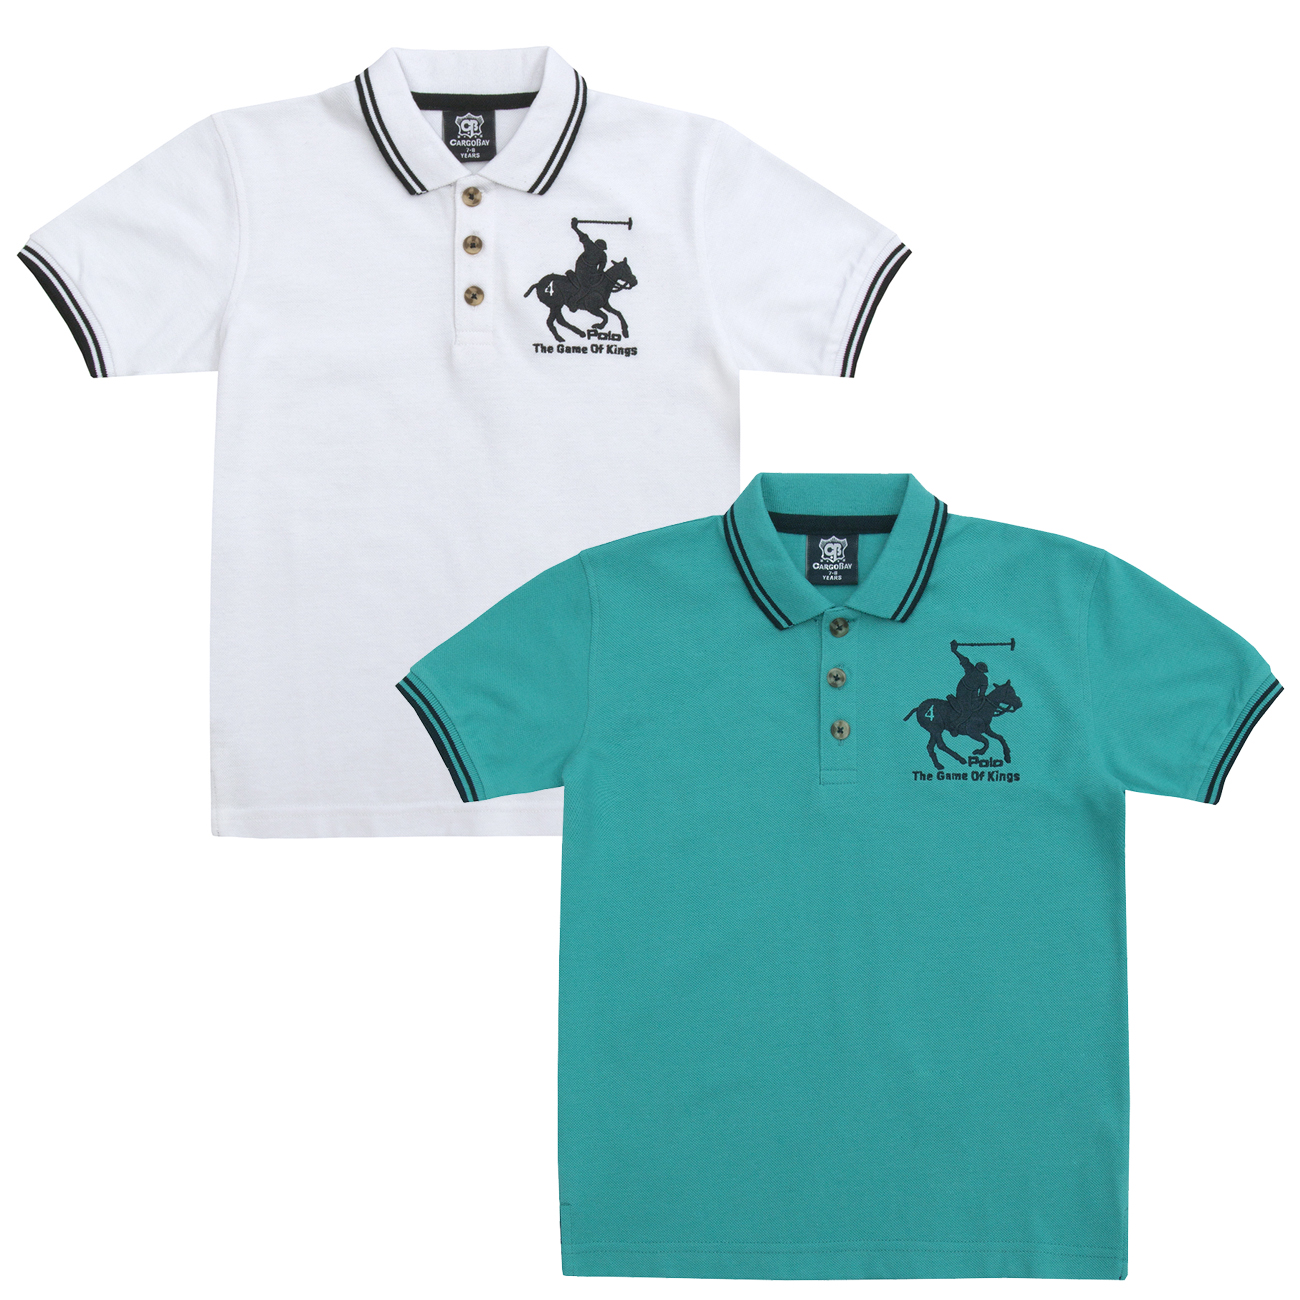 Boys Short Sleeved Cotton Blend Summer Top Polo shirt T shirt Size Age 7-13 